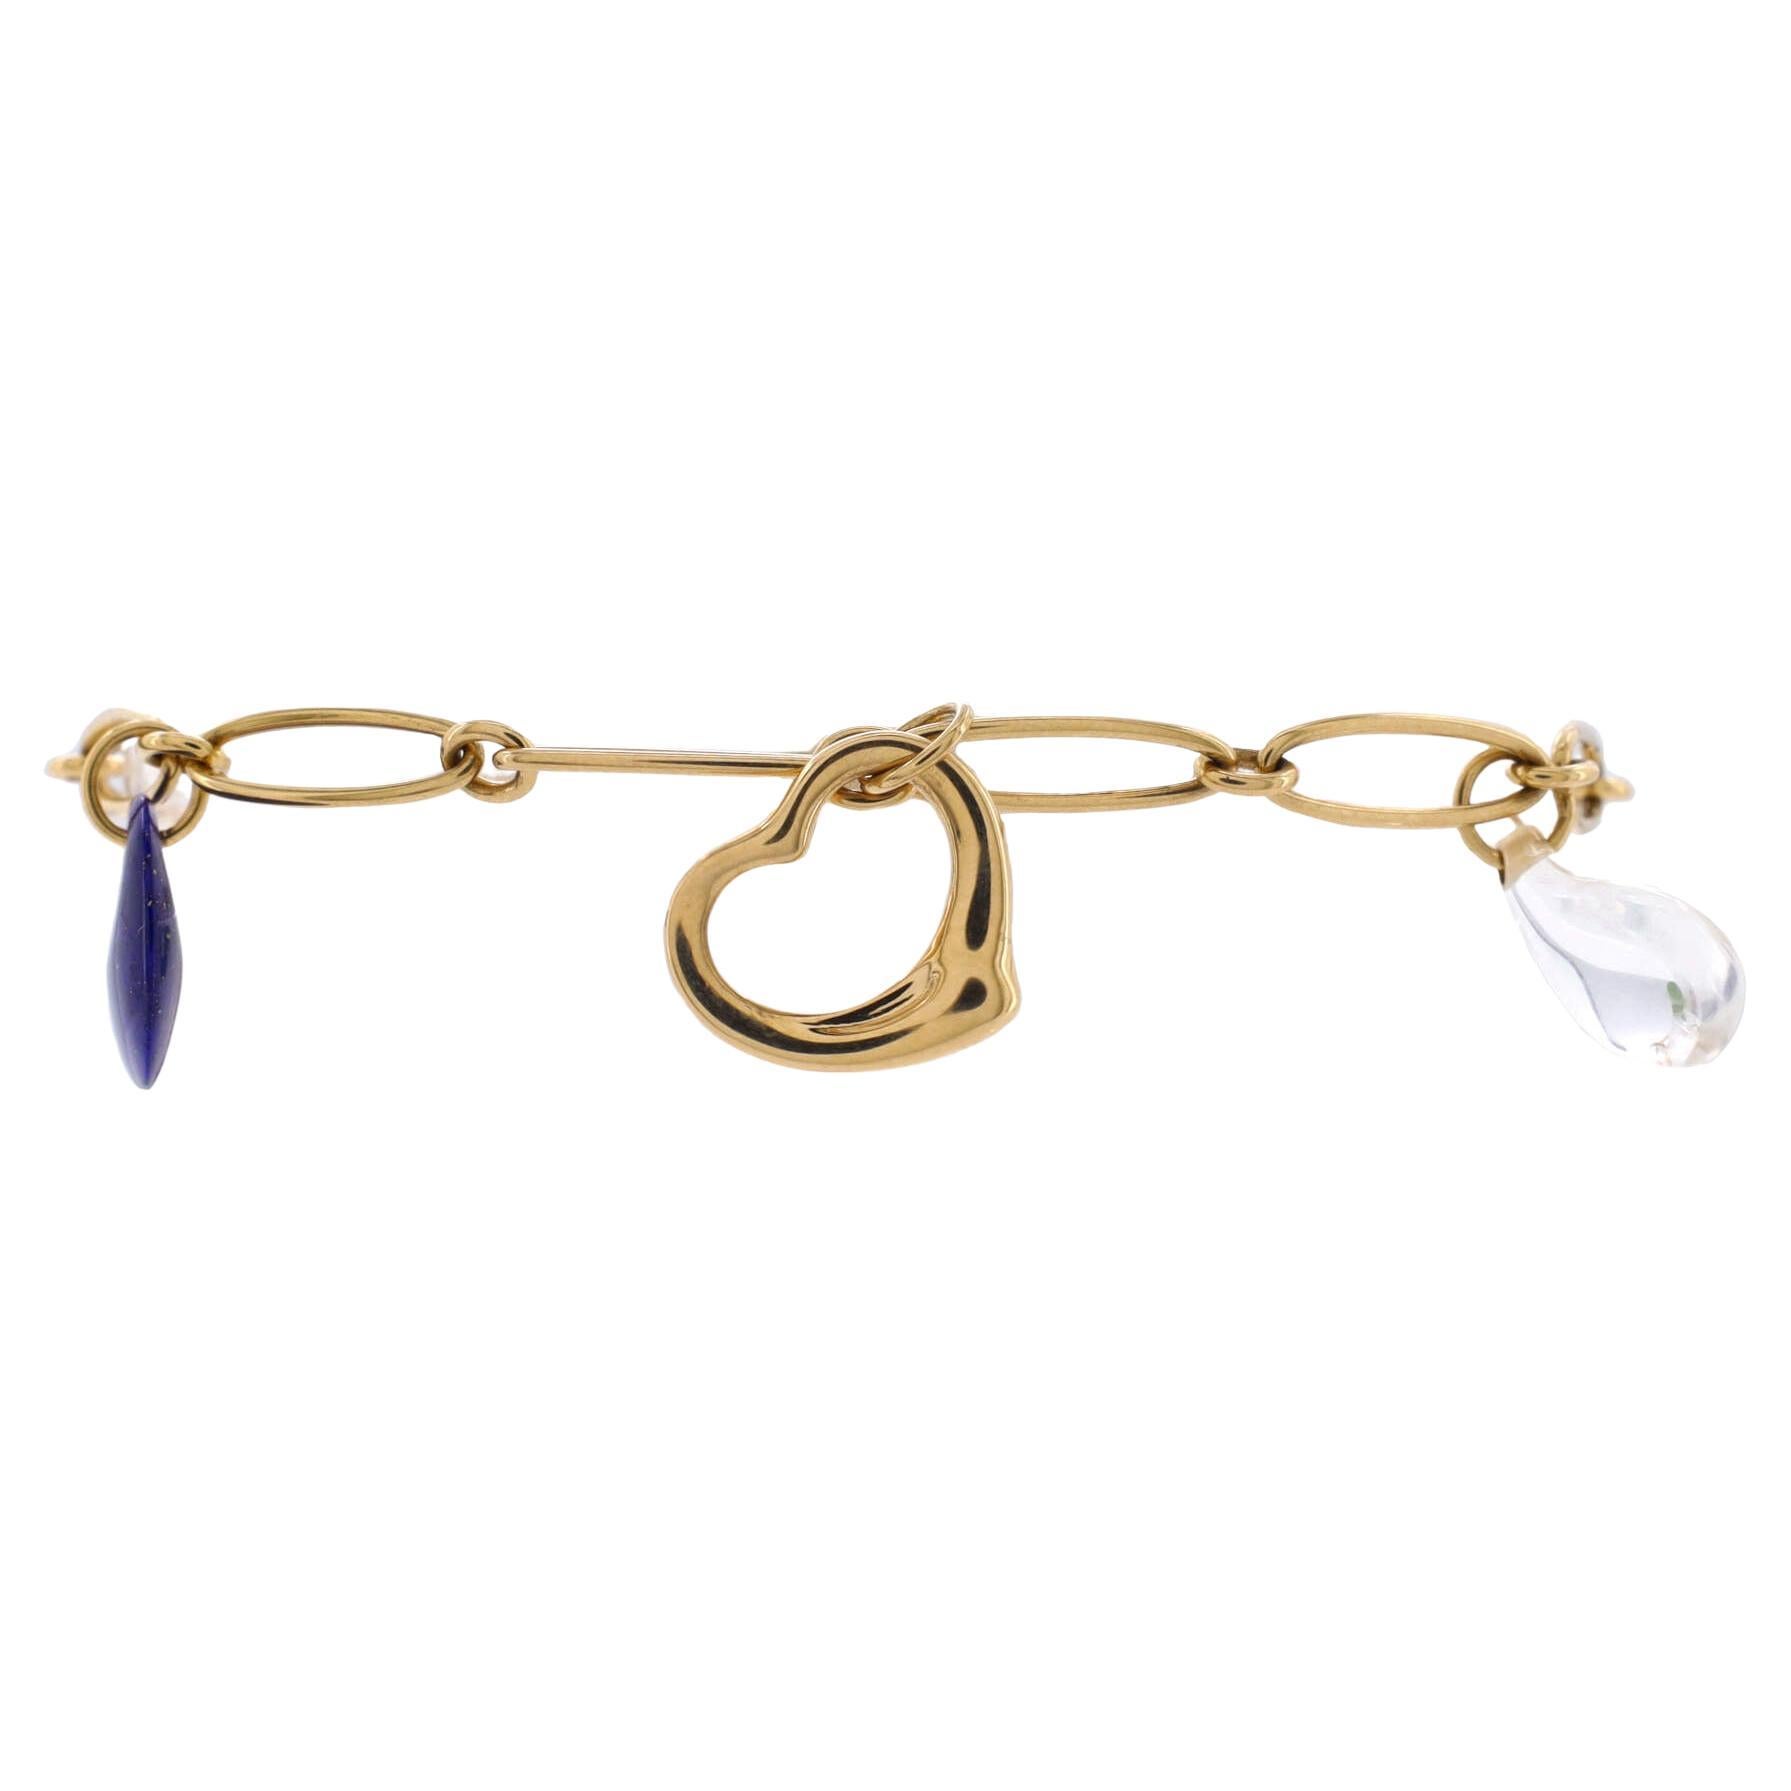 Tiffany & Co. Elsa Peretti Five Charms Bracelet 18k Yellow Gold with Lapi